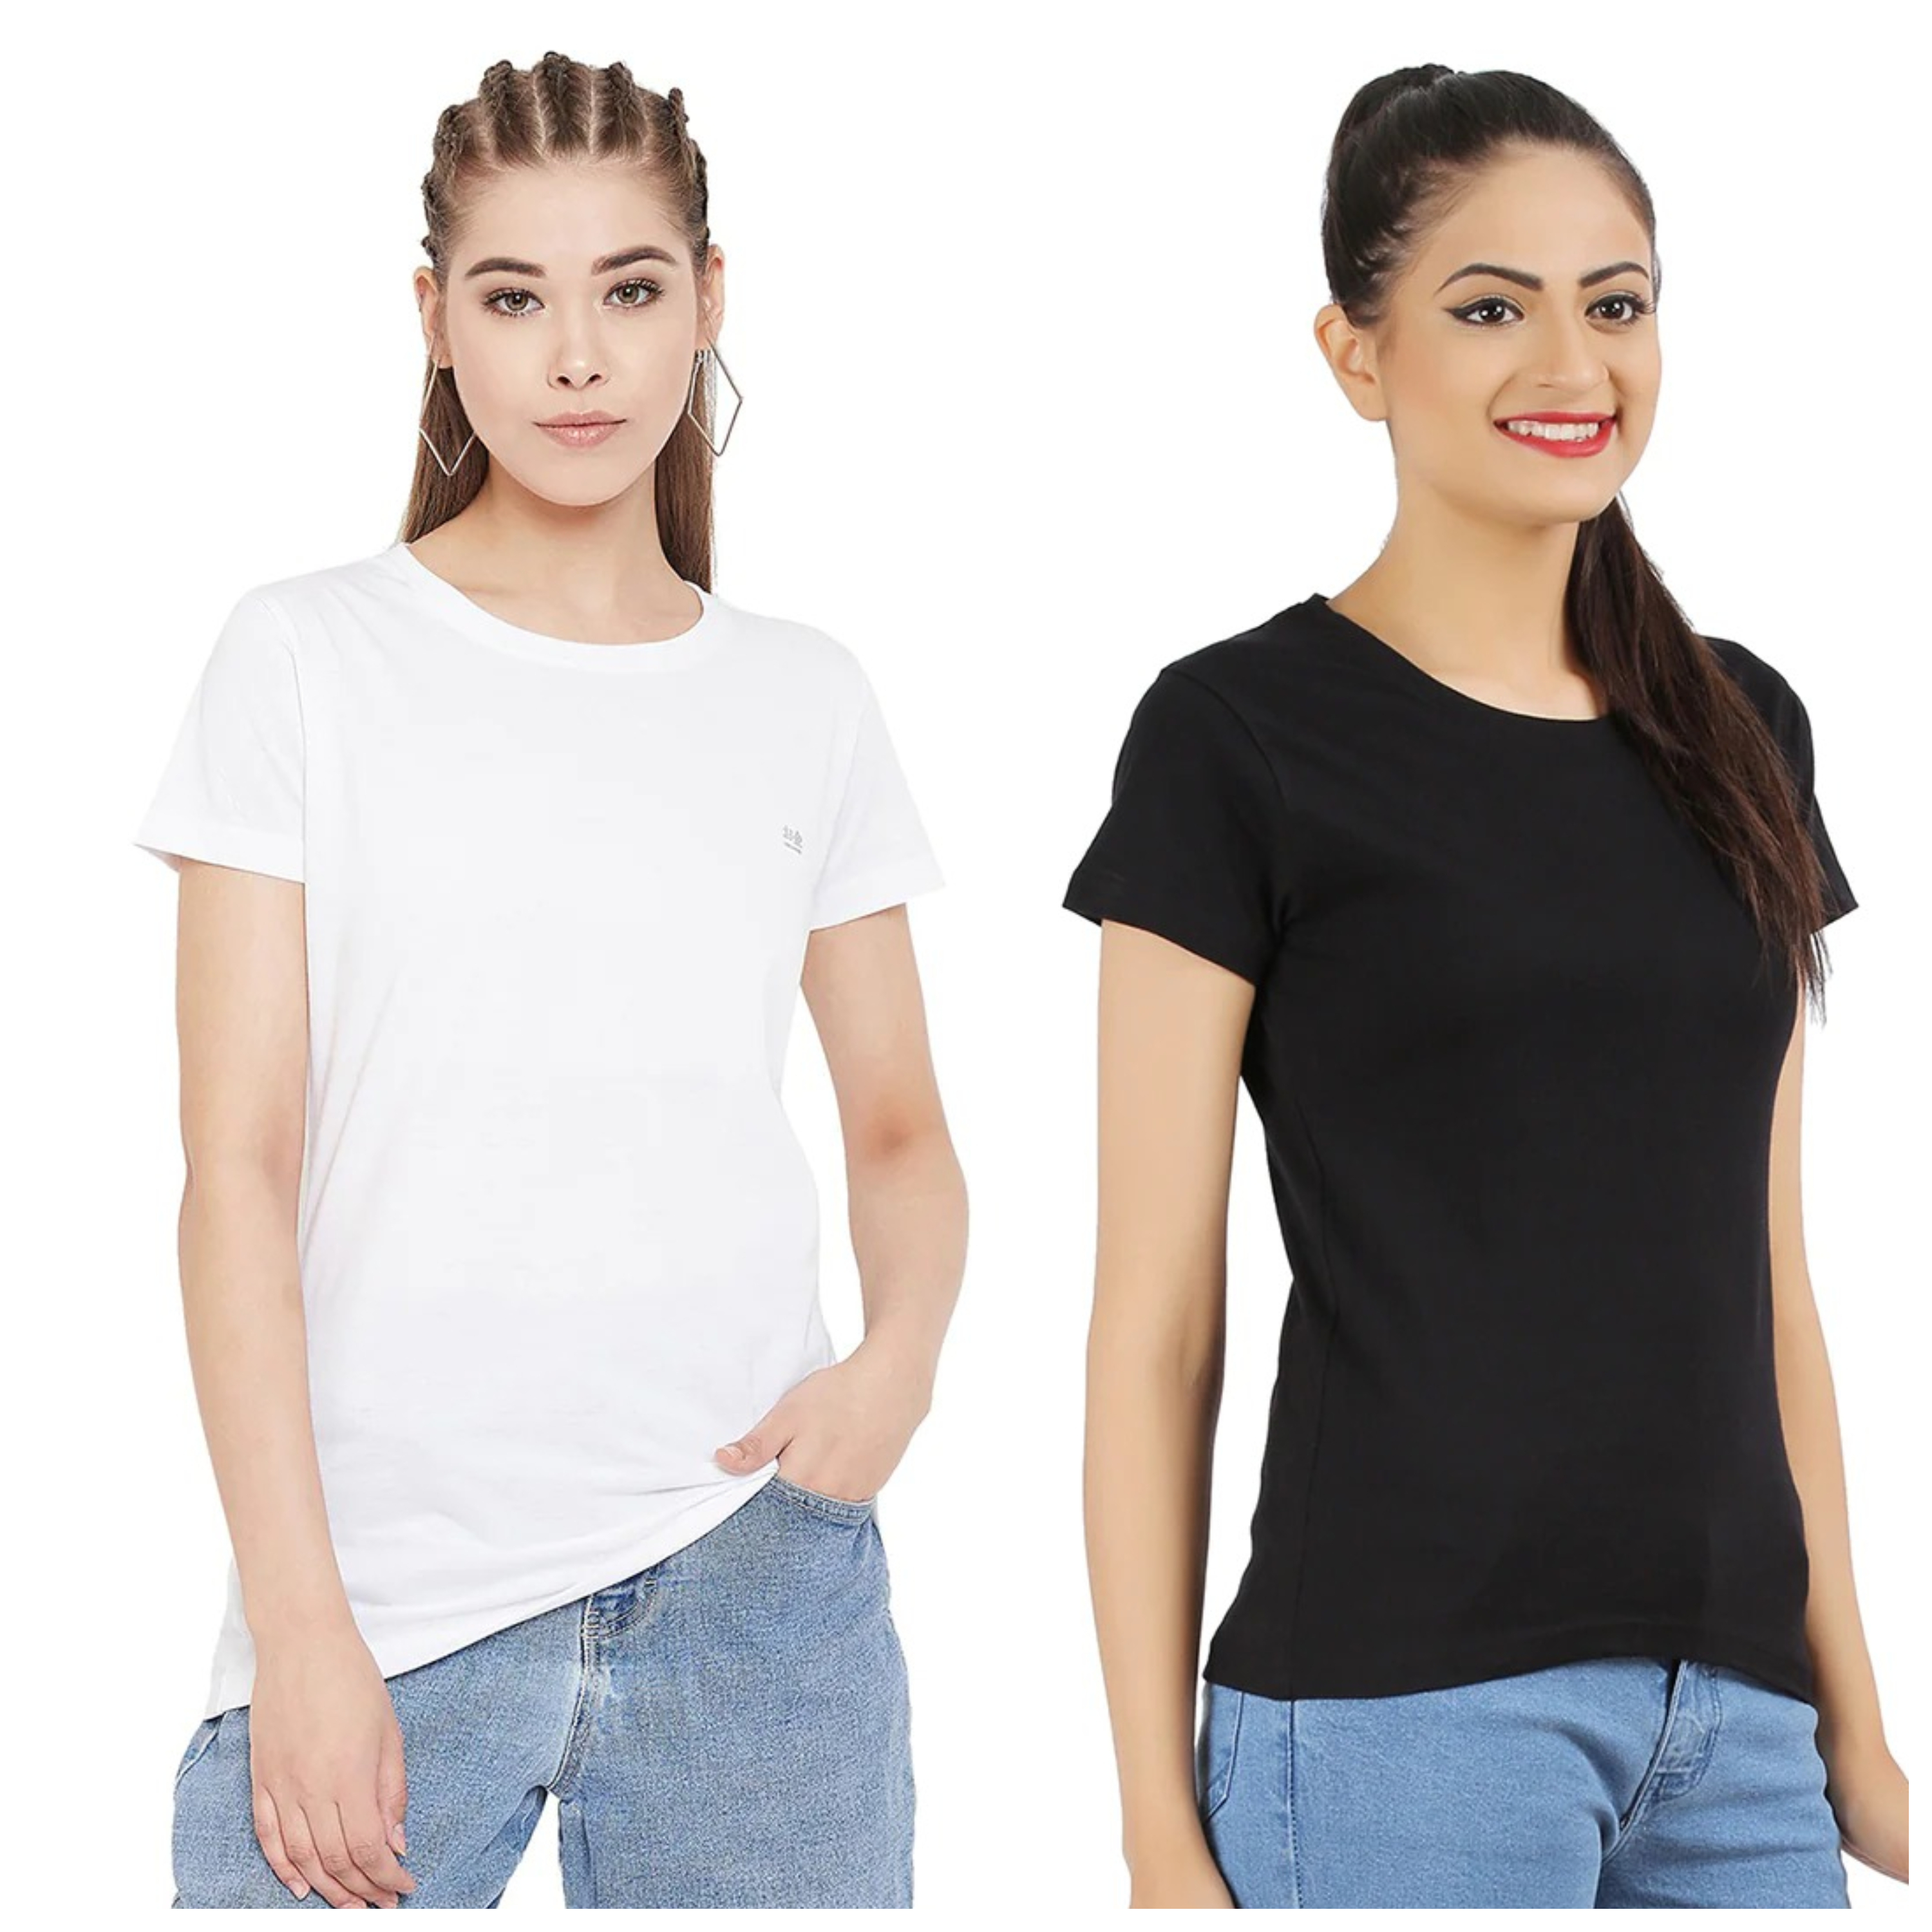 Tijuca Fashion Girls Half Sleeves Black and White T-Shirts Combo Pack (White & Black)